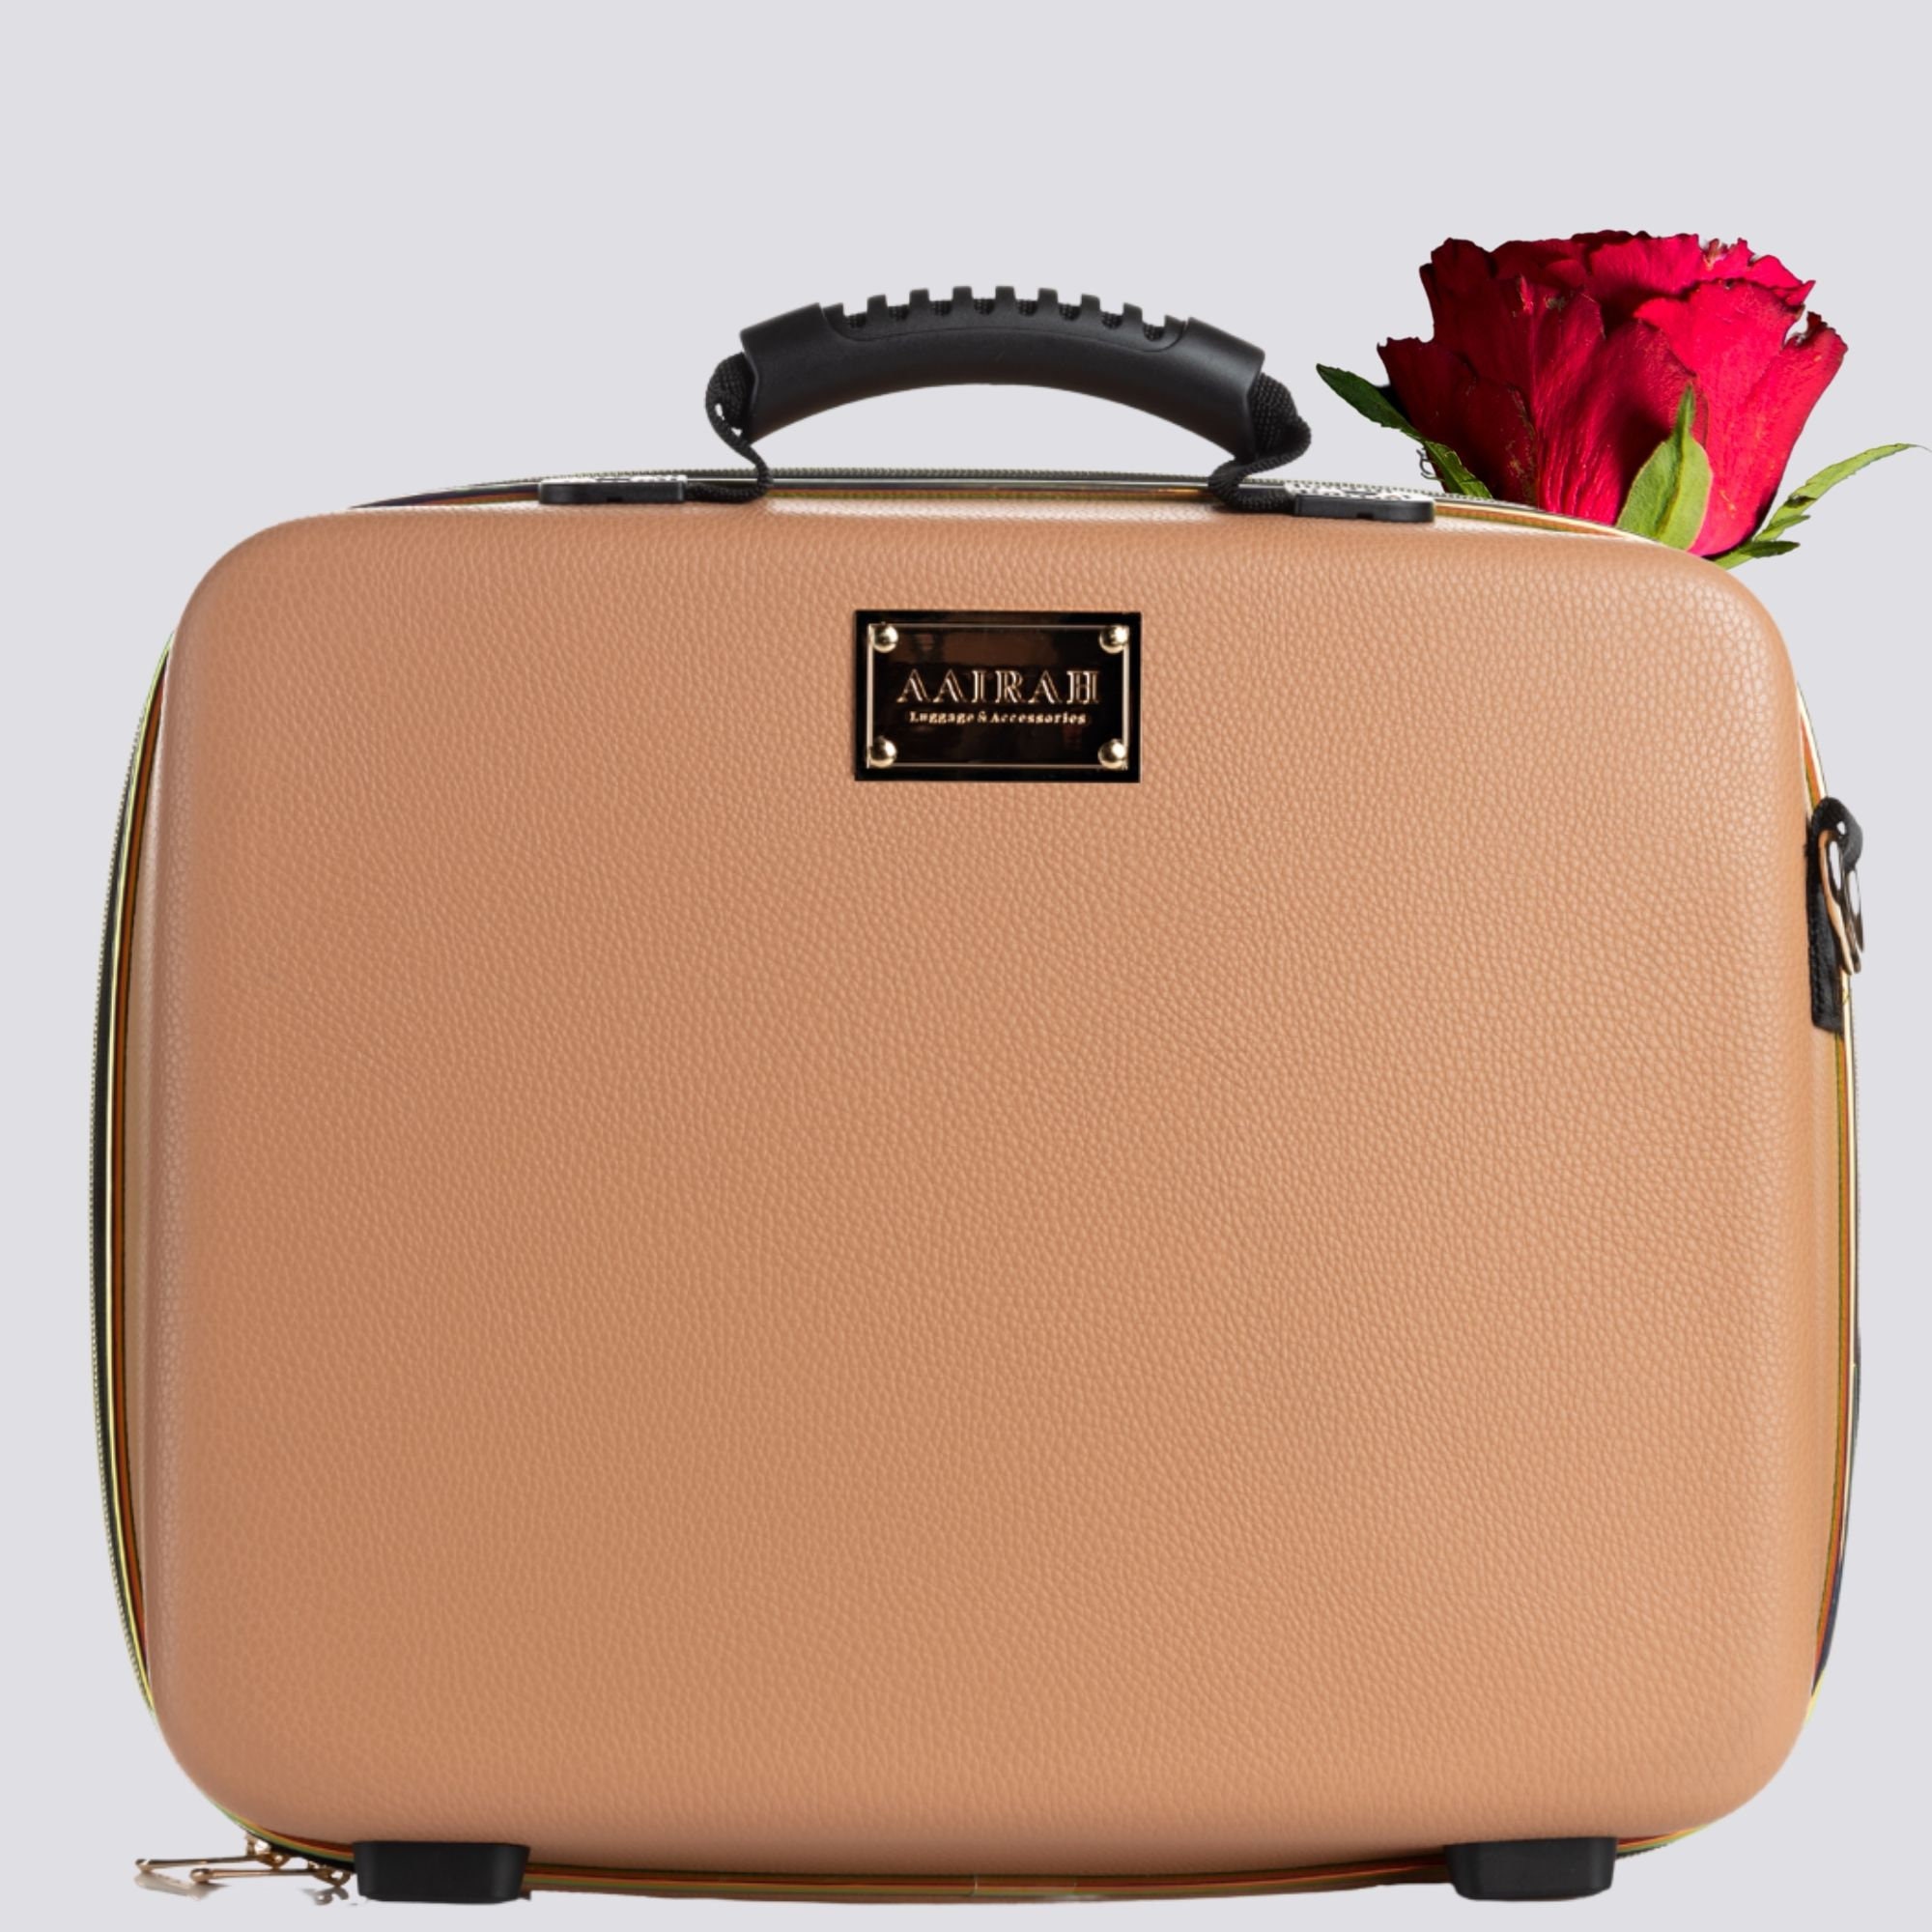 GLAMFORT Travel Makeup Bag,Professional Train Case India